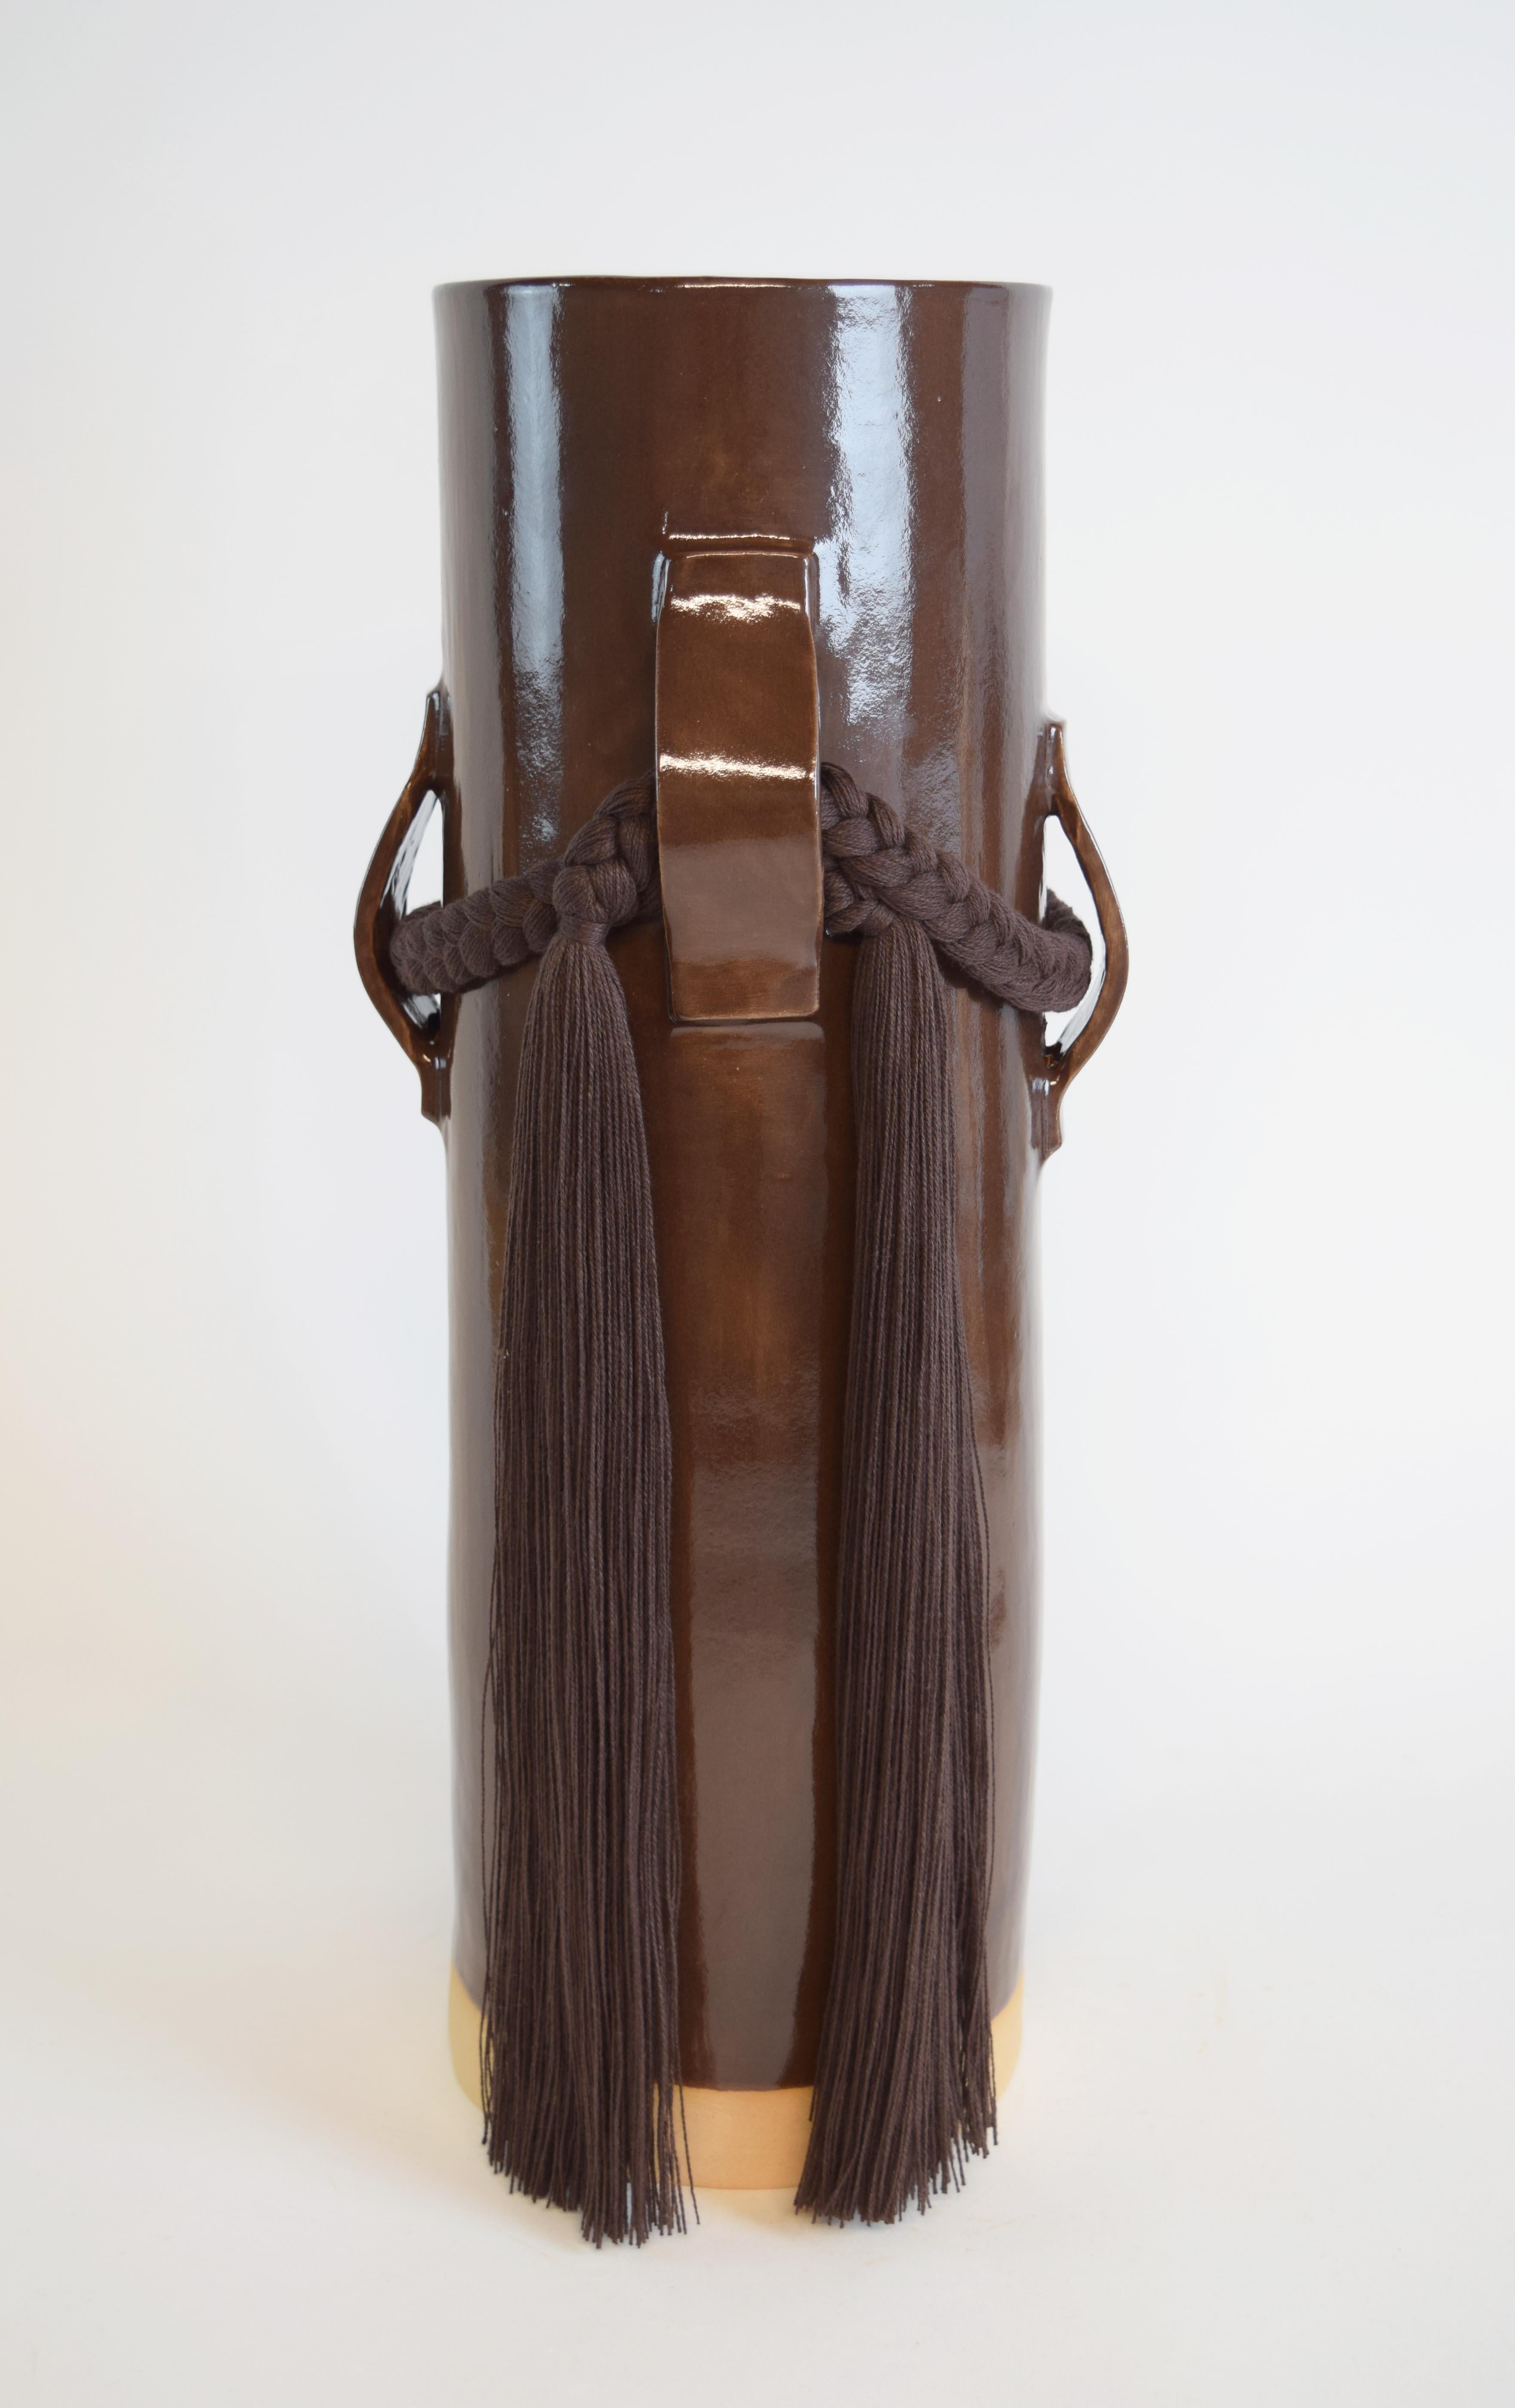 Organic Modern Handmade Ceramic Vase #800 in Brown Glaze with Dark Brown Cotton Fringe Detail For Sale